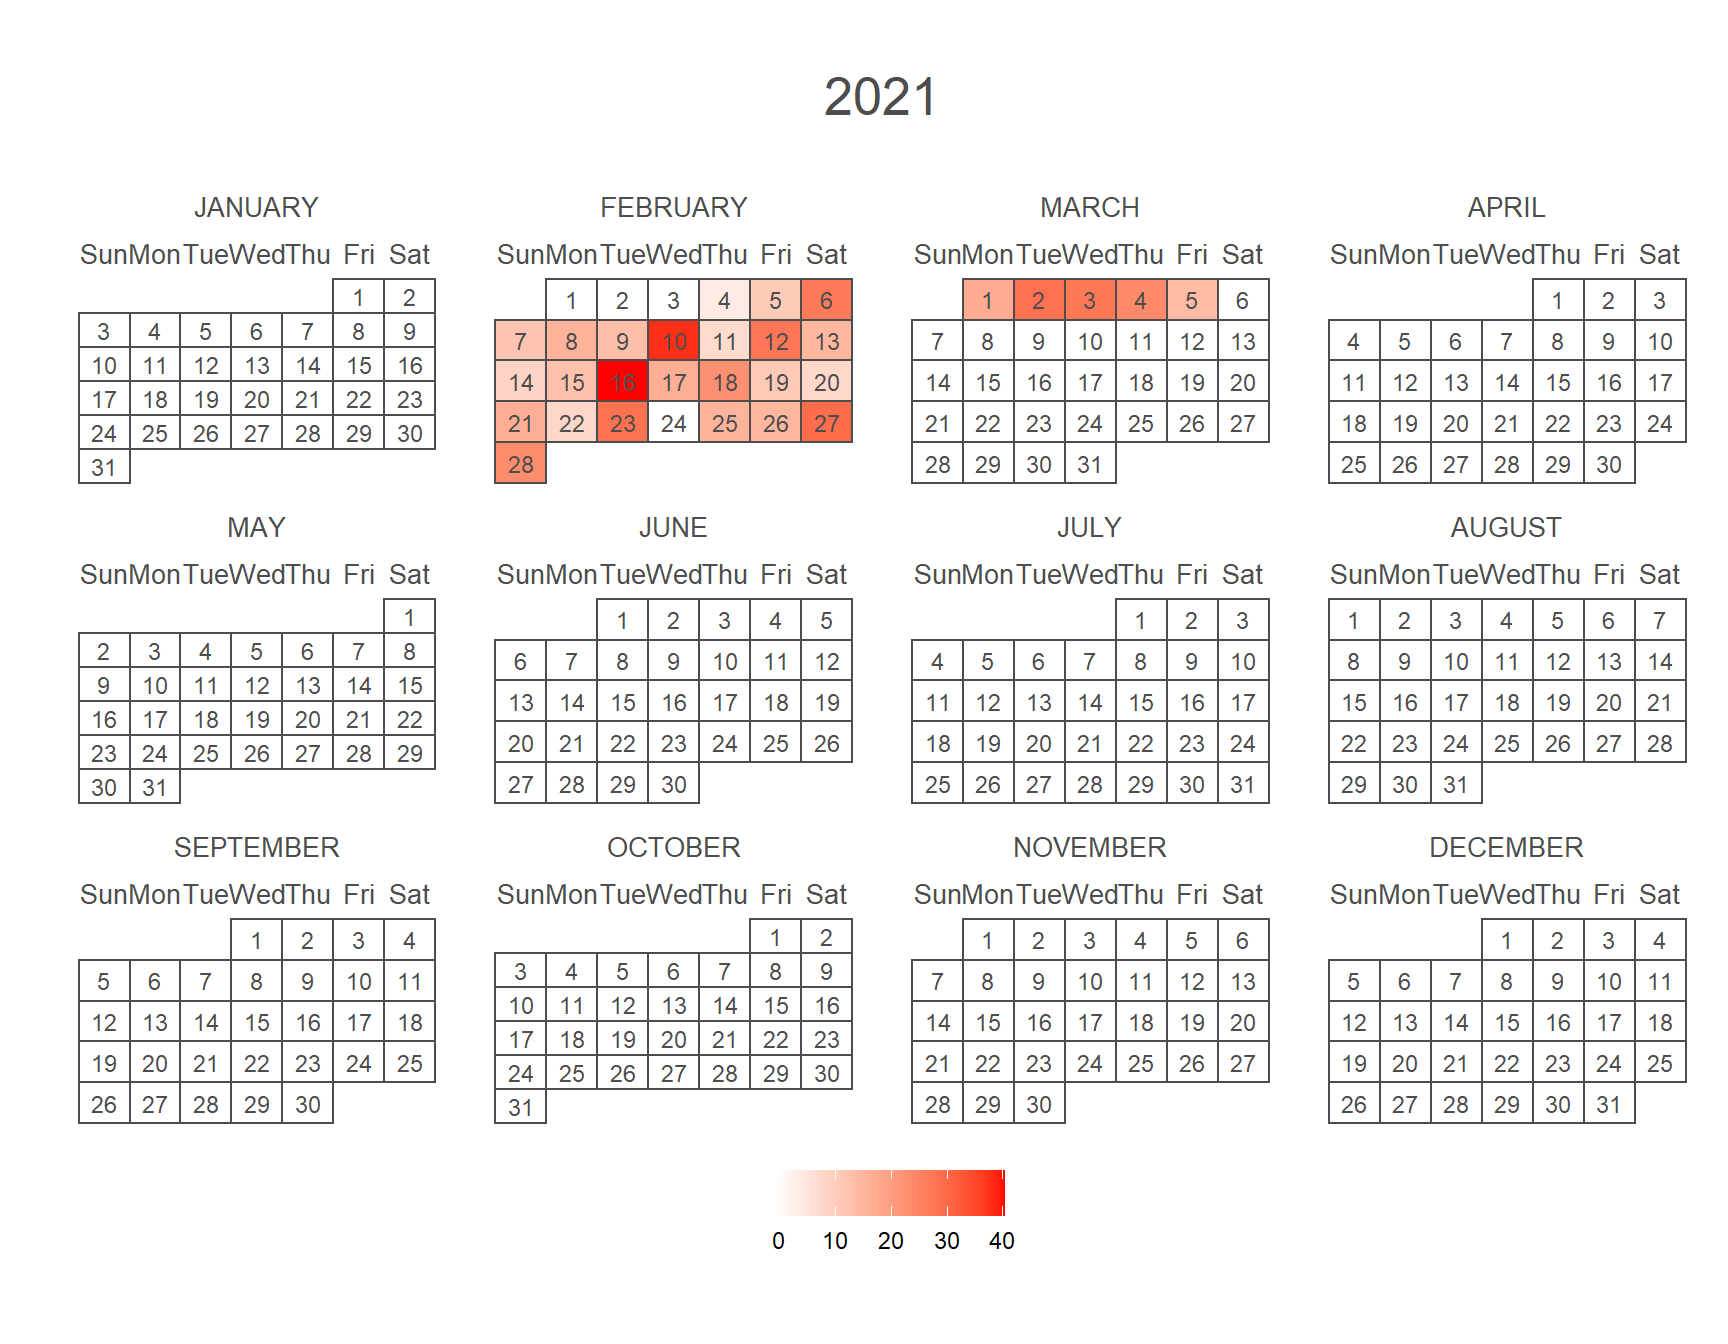 Heat map of certain days in a calendar